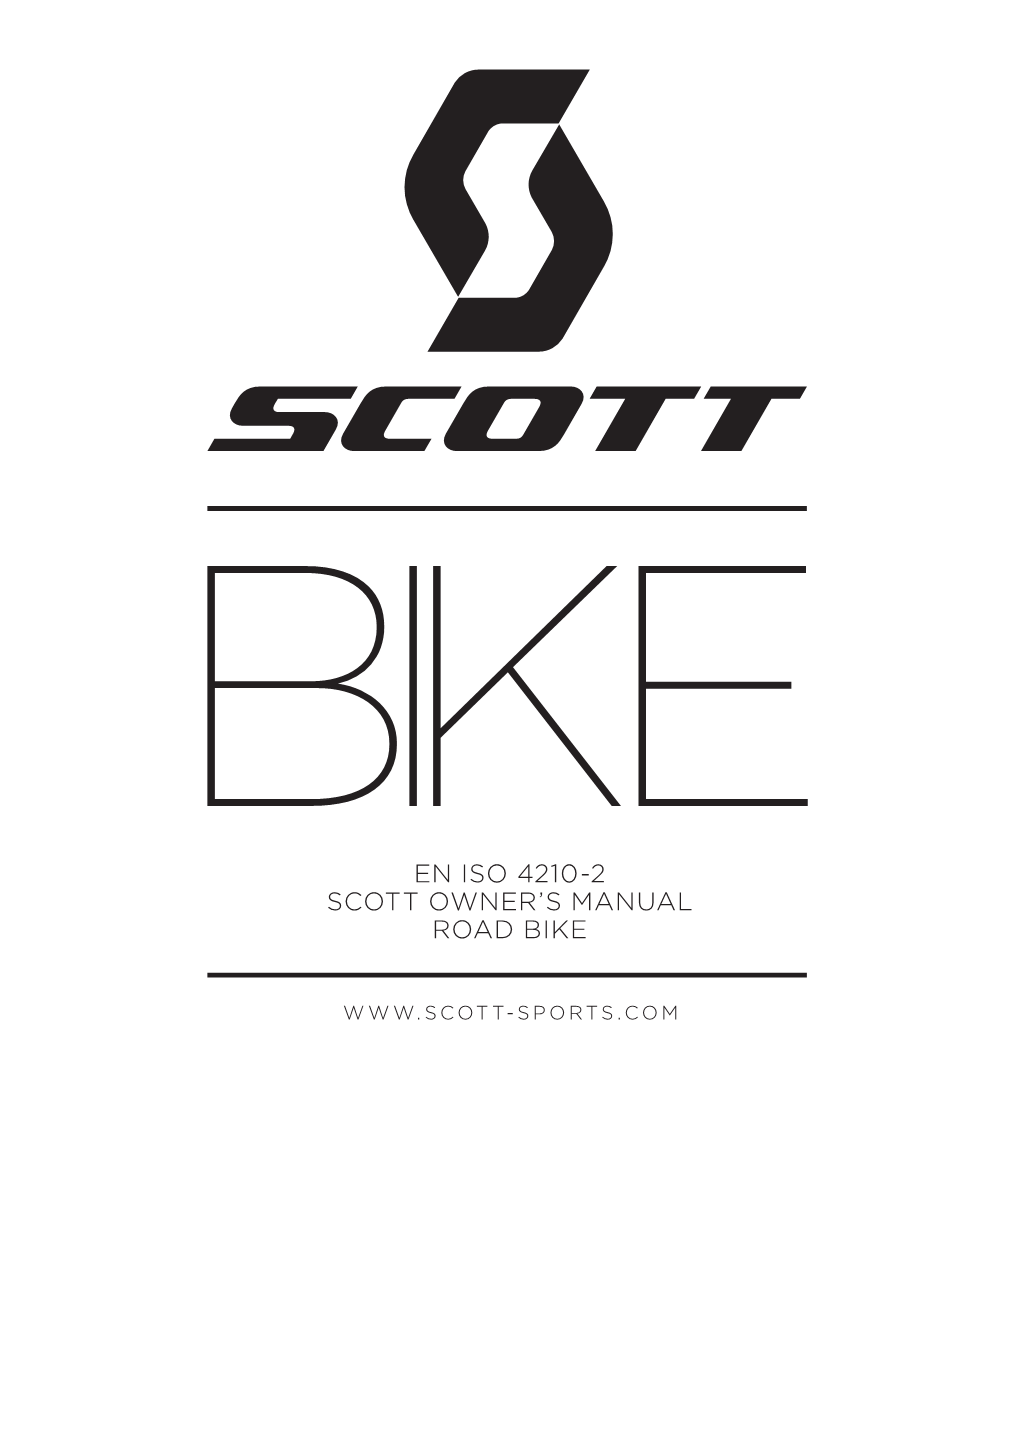 En Iso 4210-2 Scott Owner's Manual Road Bike